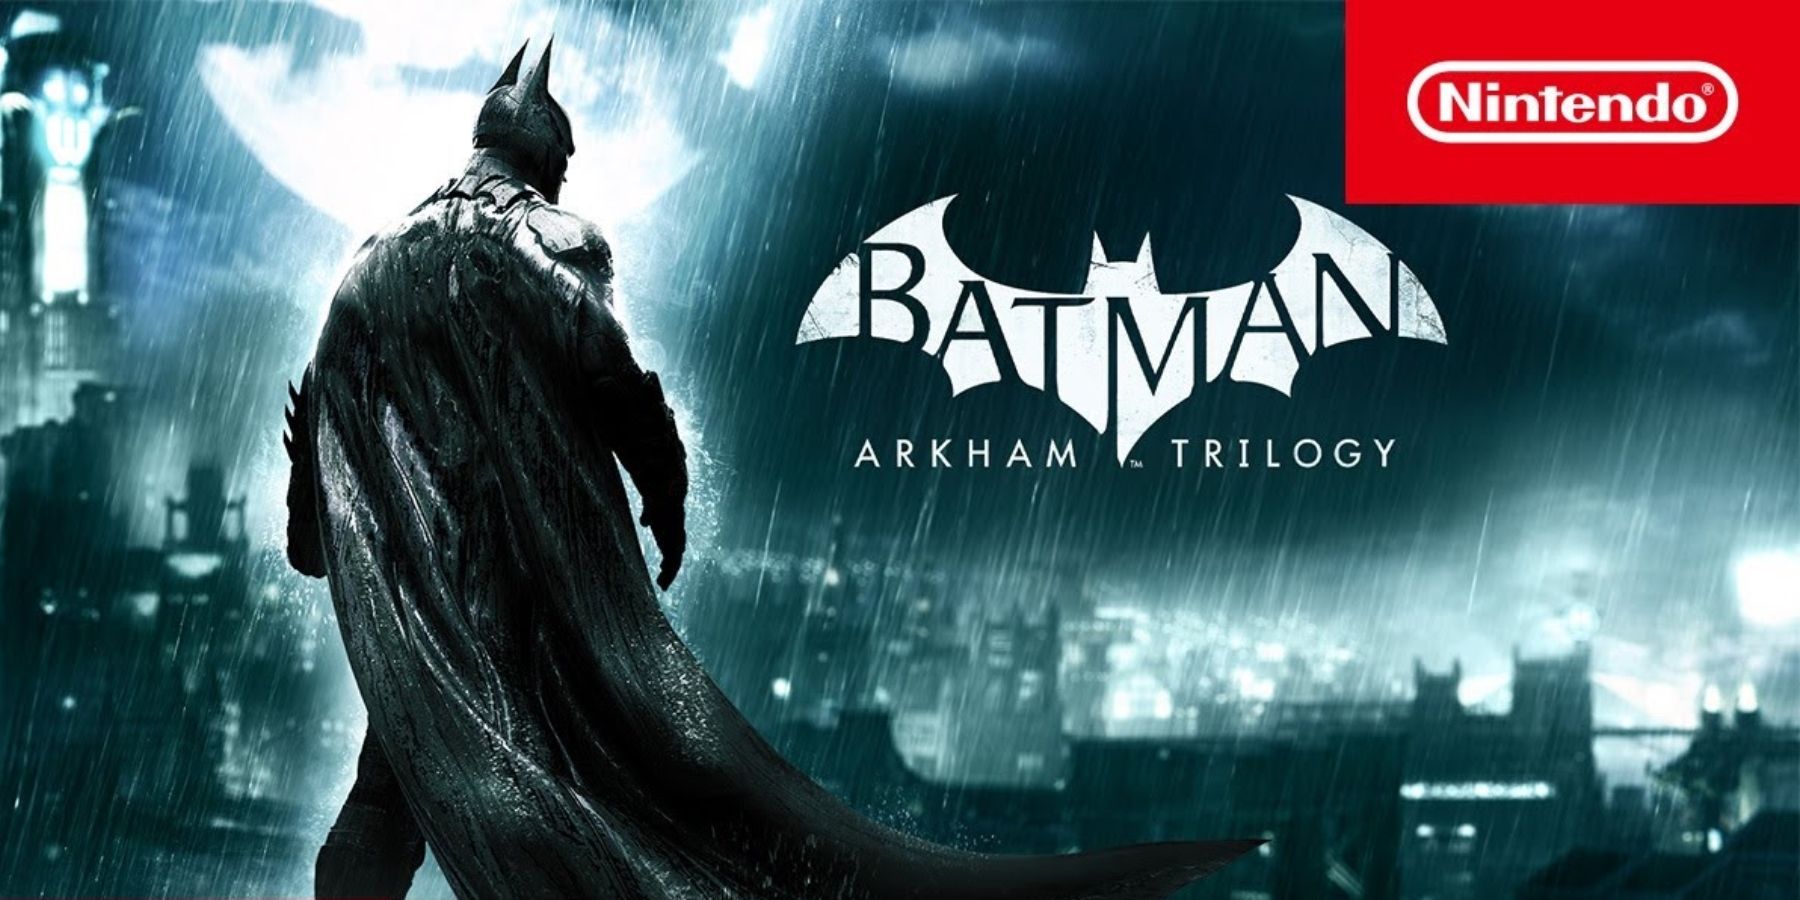 Batman: Arkham Trilogy has been delayed for Nintendo Switch